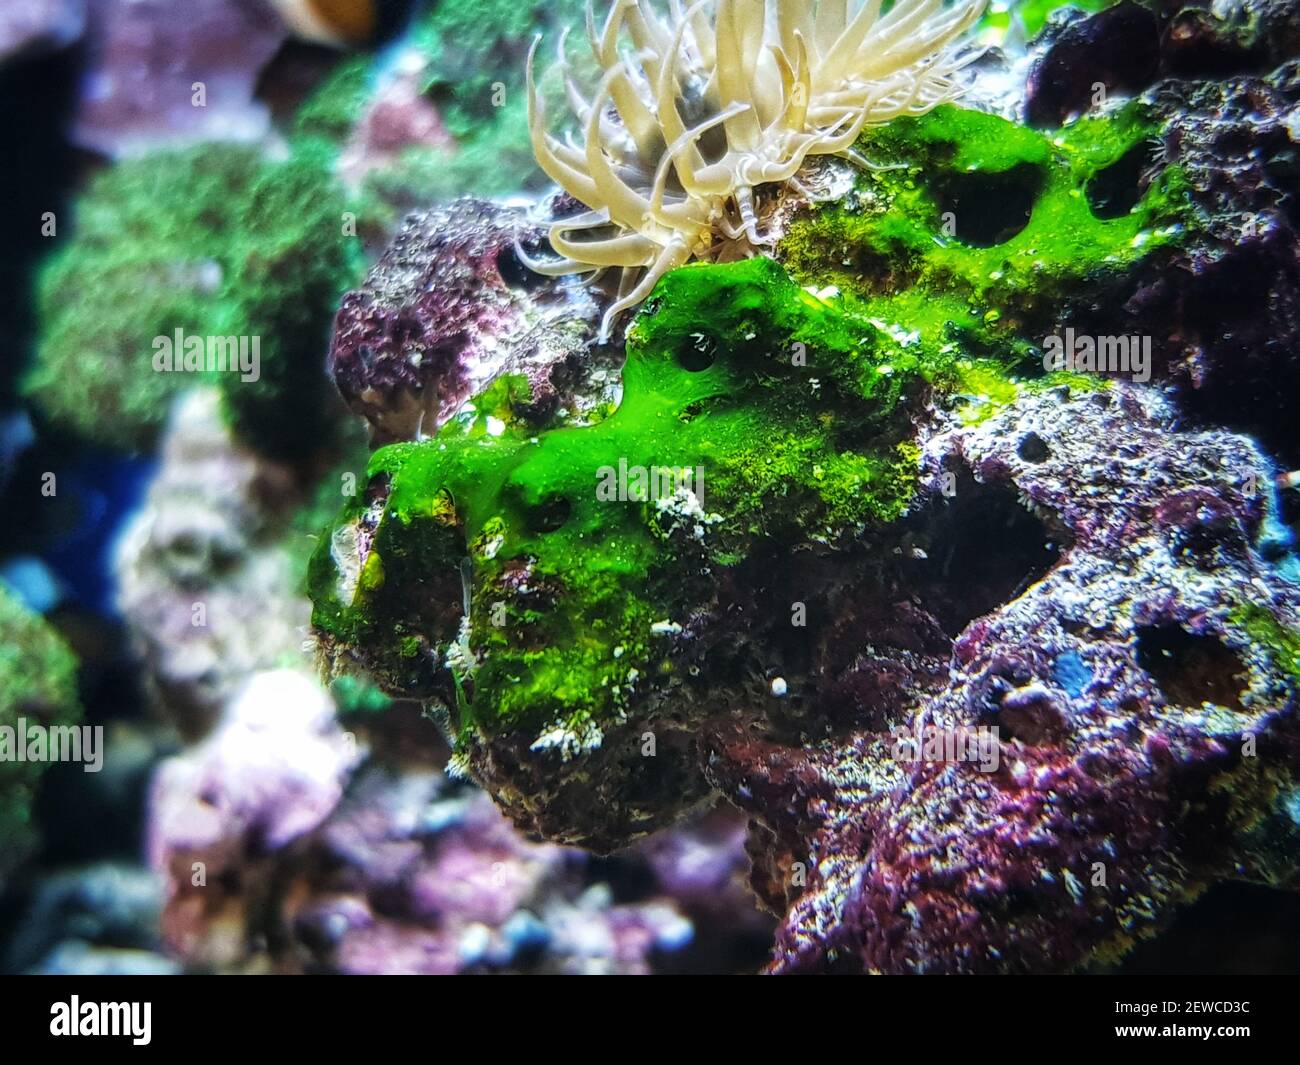 Green cyanobacteria attached on the rock in reef aquarium tank Stock Photo